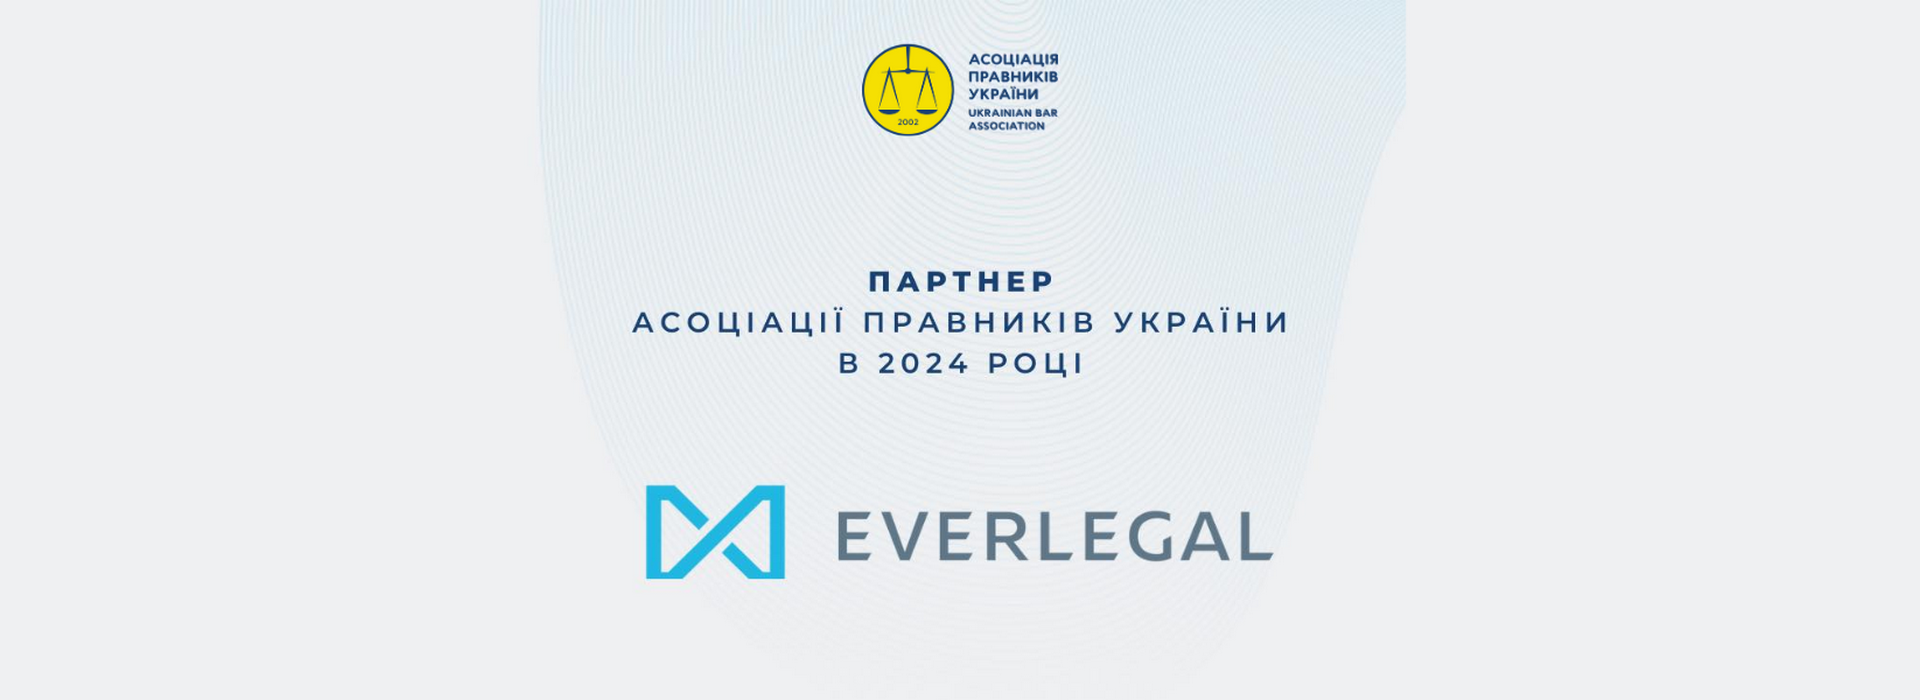 EVERLEGAL – партнер Асоціації правників України в 2024 році!